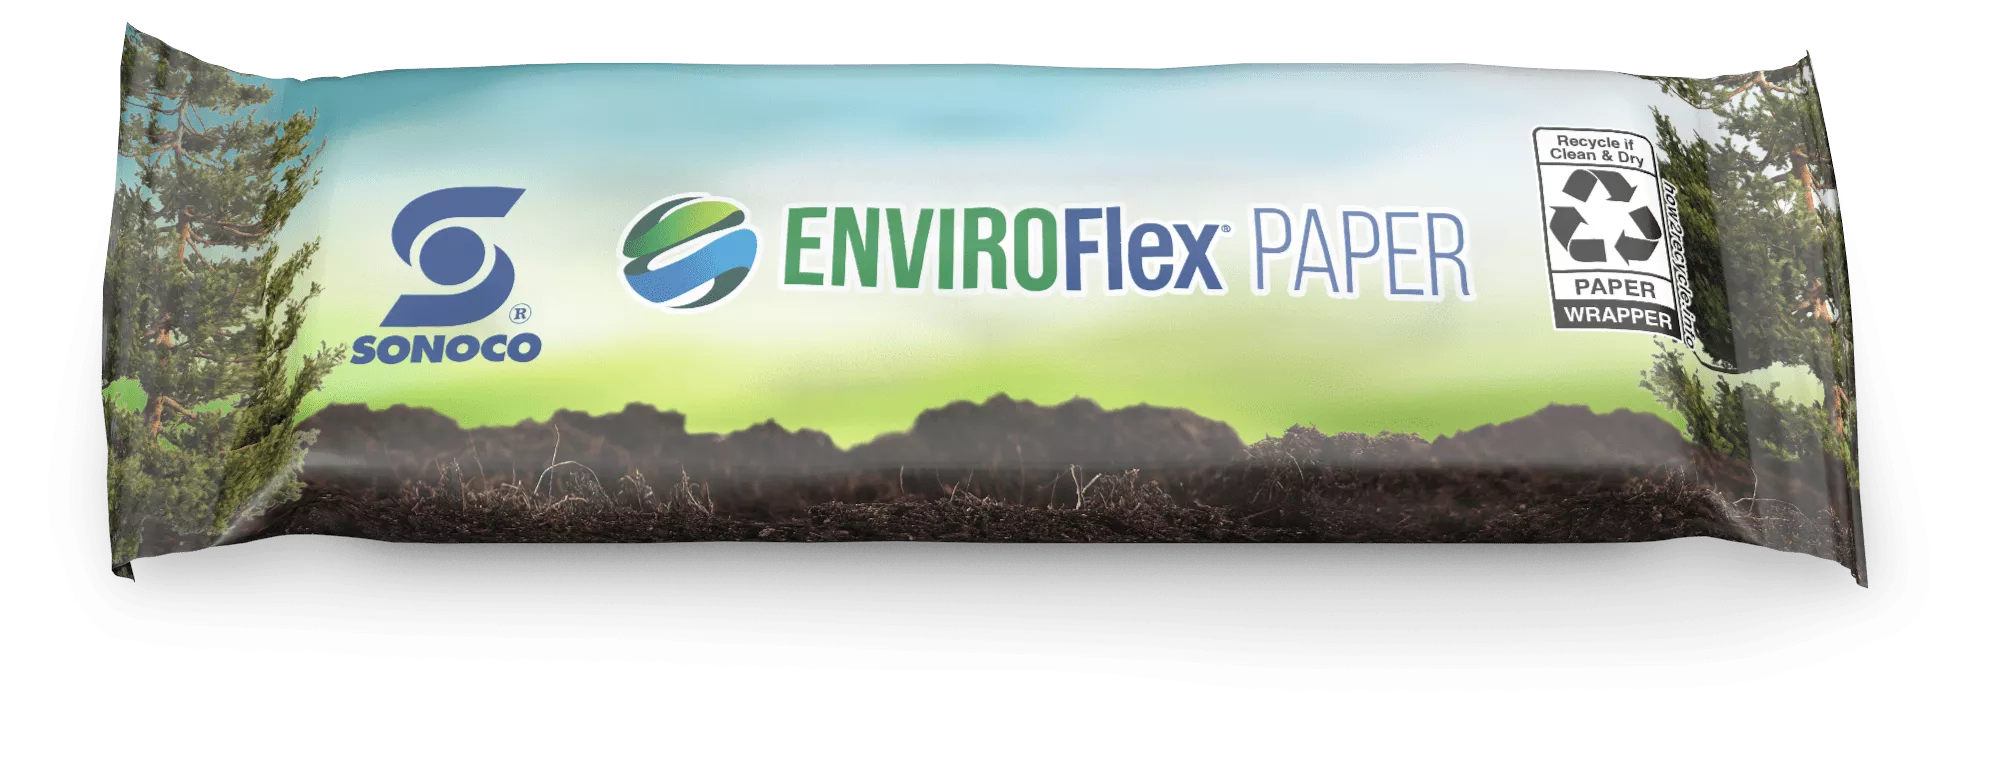 Enviroflex paper cold seal packaging